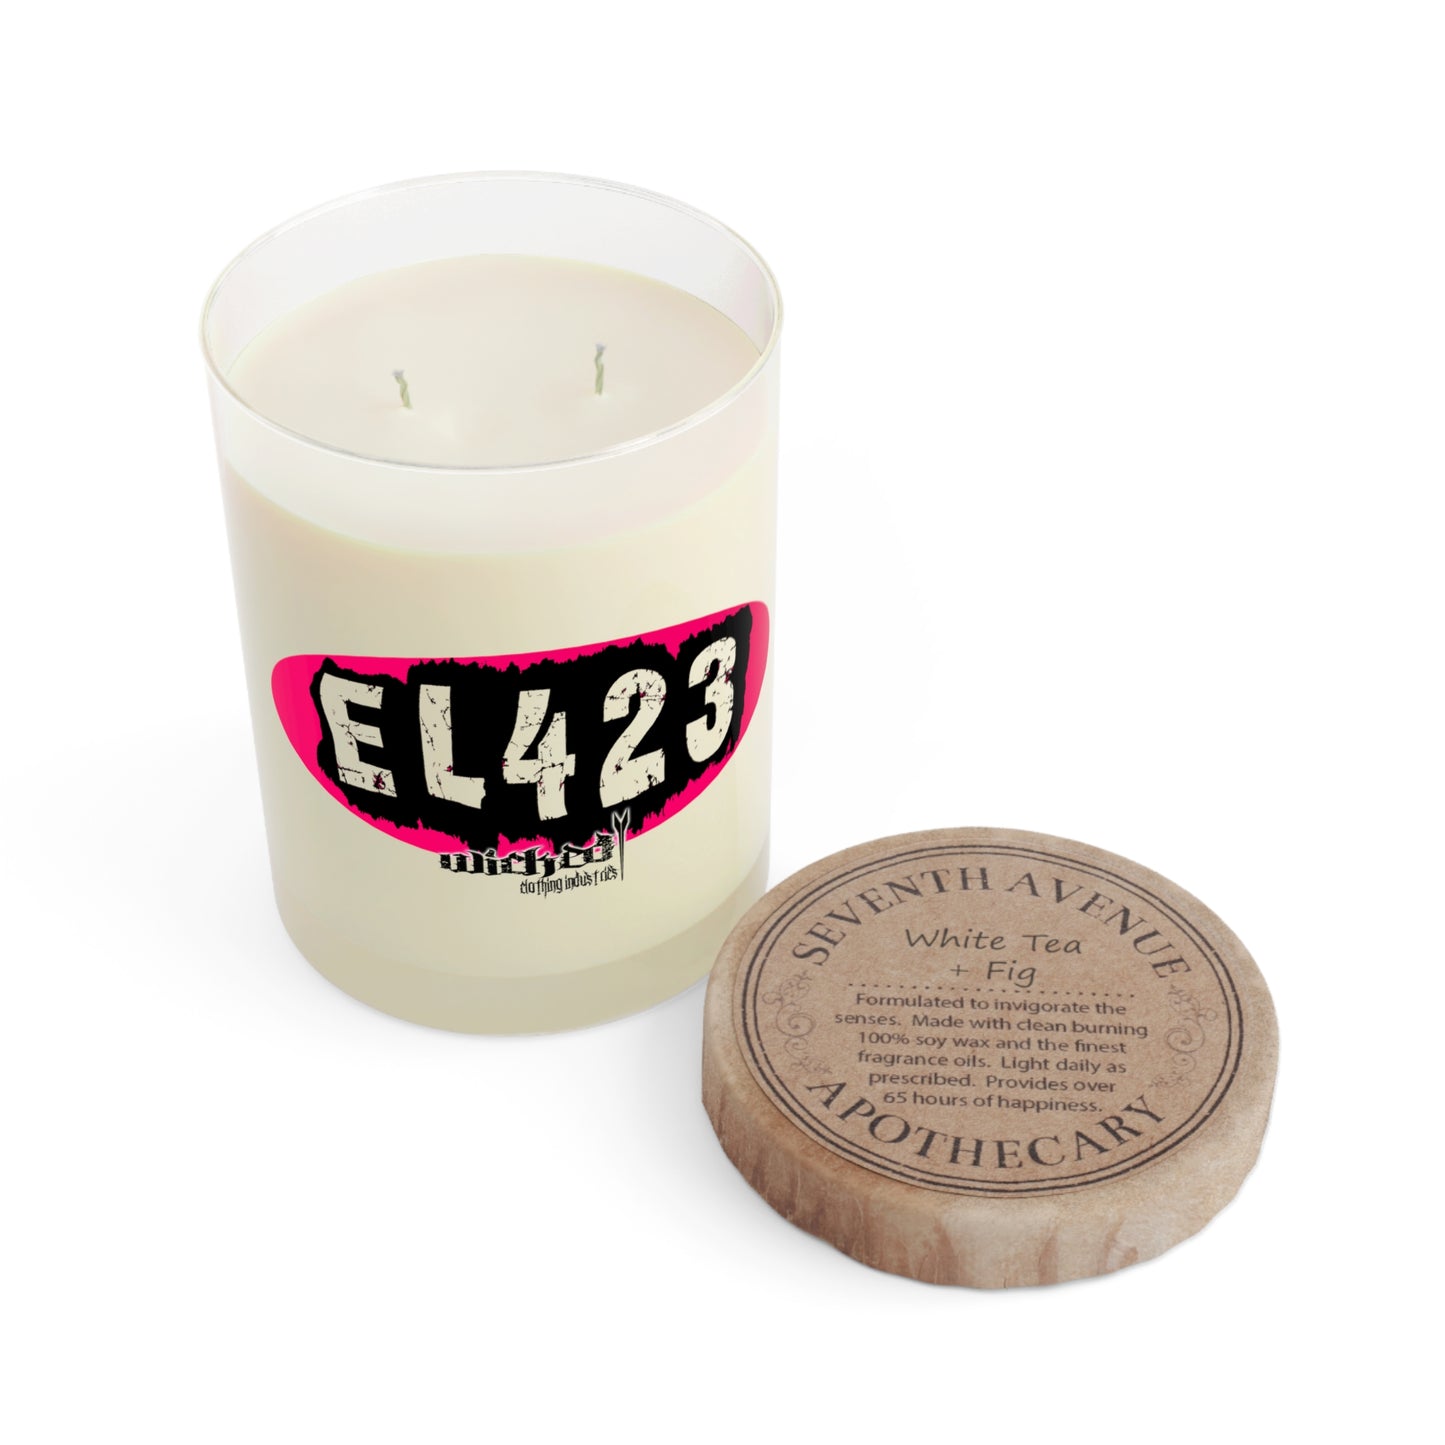 EL423 Alternative /Scented Candle -  Glass, 11oz